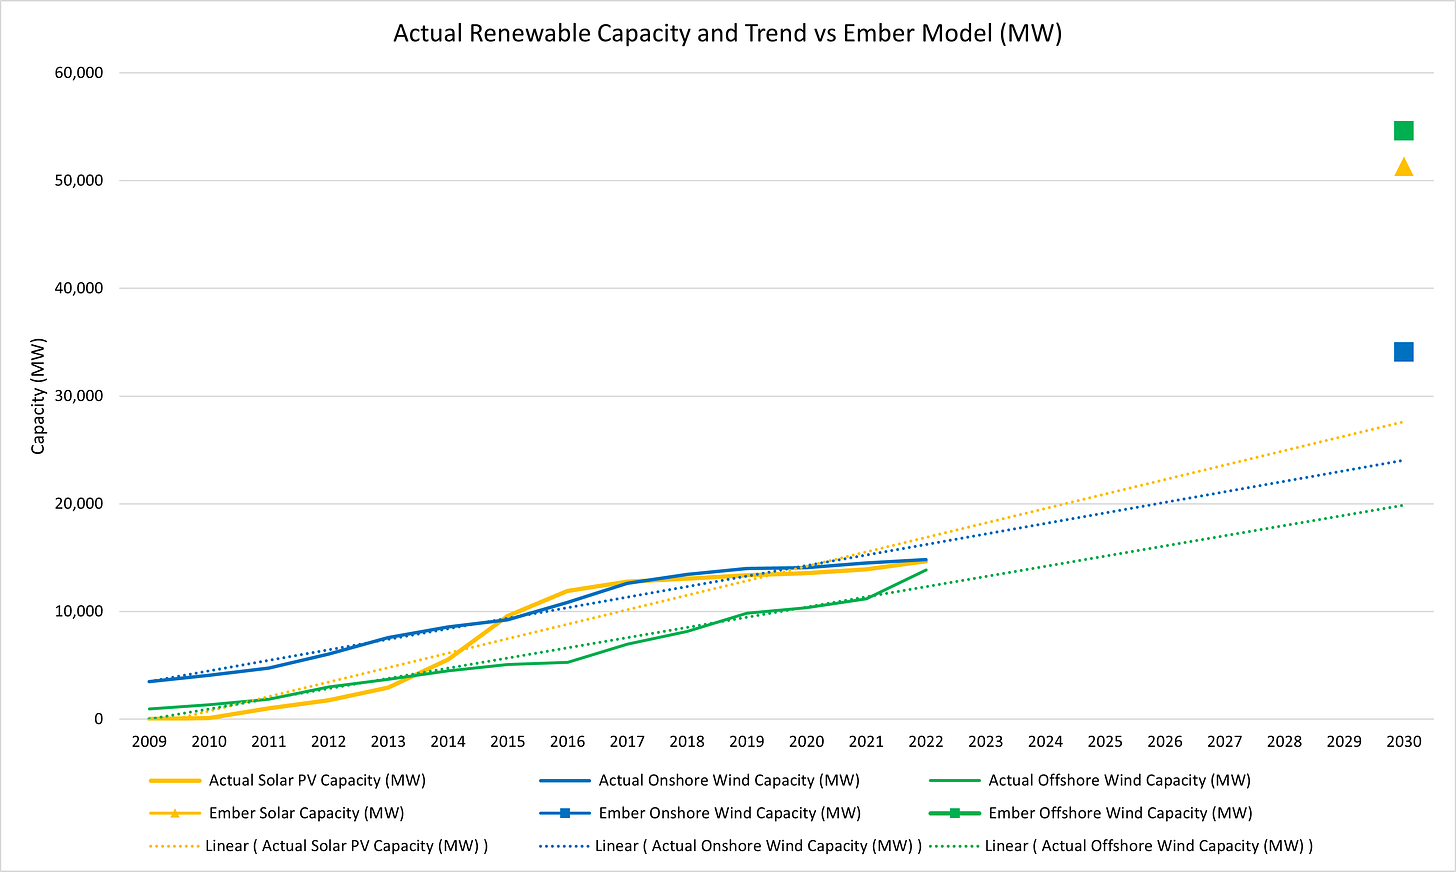 Figure 2 - Actual Renewable Capacity vs Ember Model (MW)